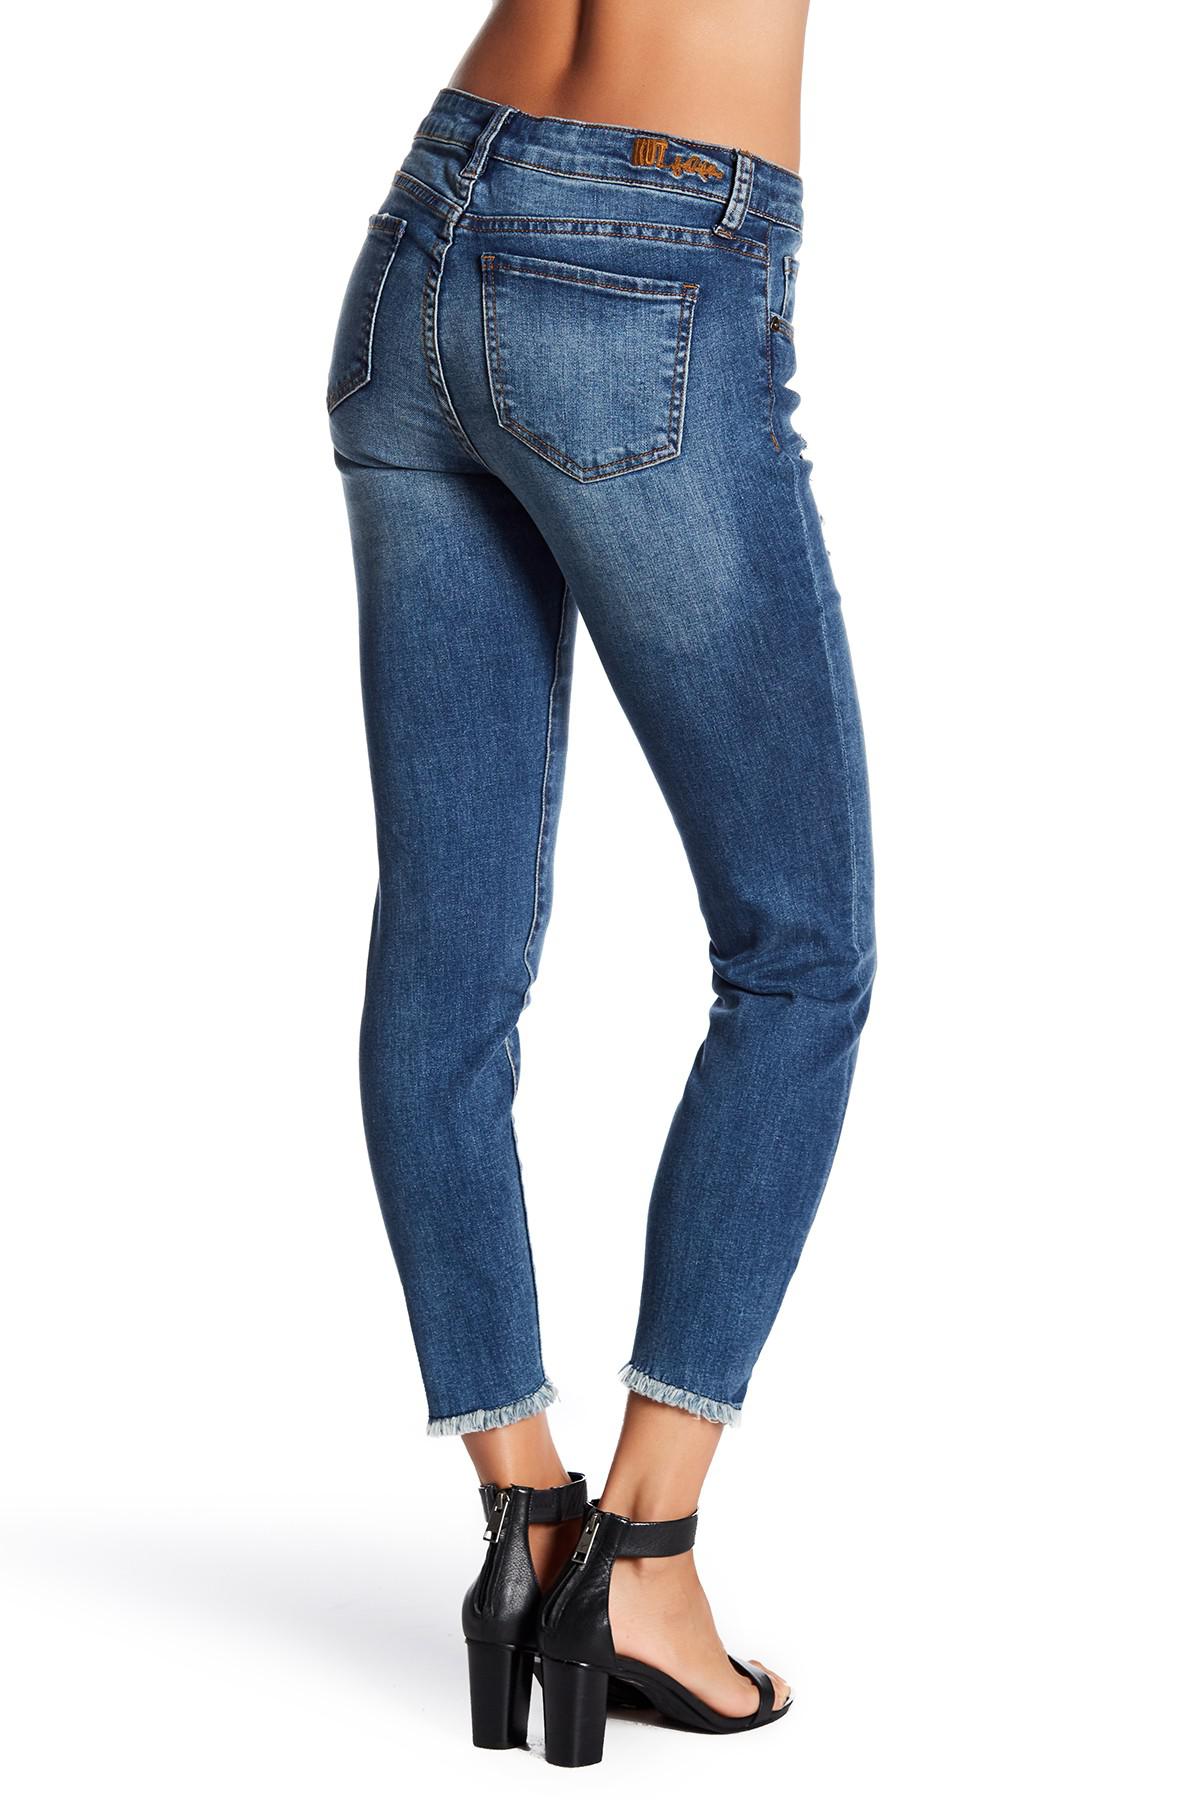 Kut From The Kloth Denim Janet Frayed Hem Skinny Jeans in Blue - Lyst